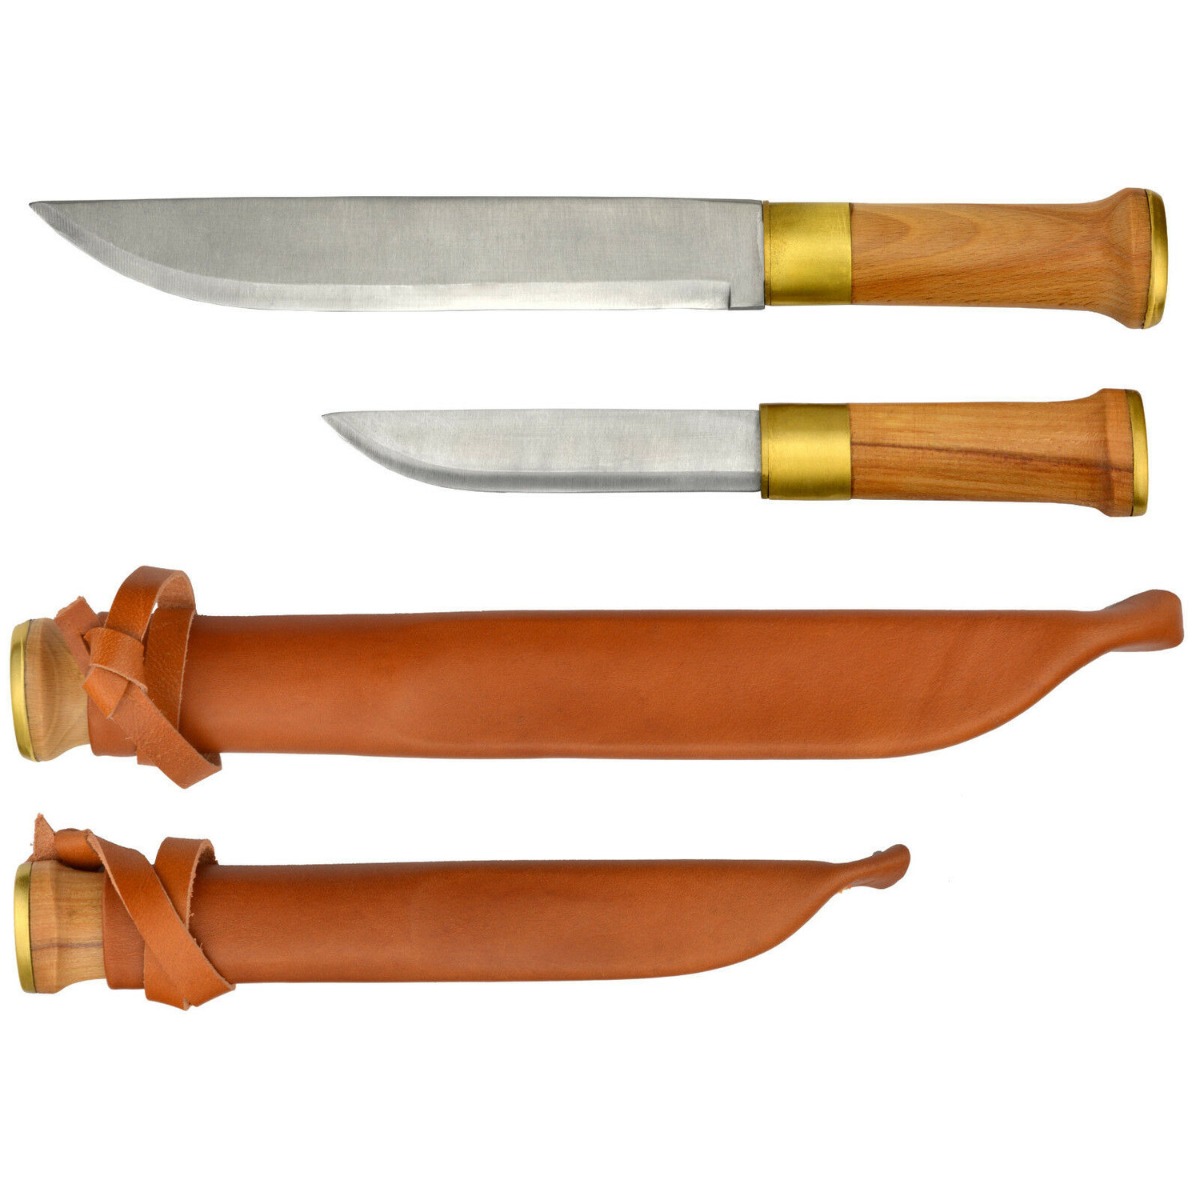 finski nož, skandinavski nož, outdoor nož, bushcraft nož, lovski nož, B33 Tactical, Army shop, B33 army shop, Trgovina z vojaško opremo, vojaška trgovina